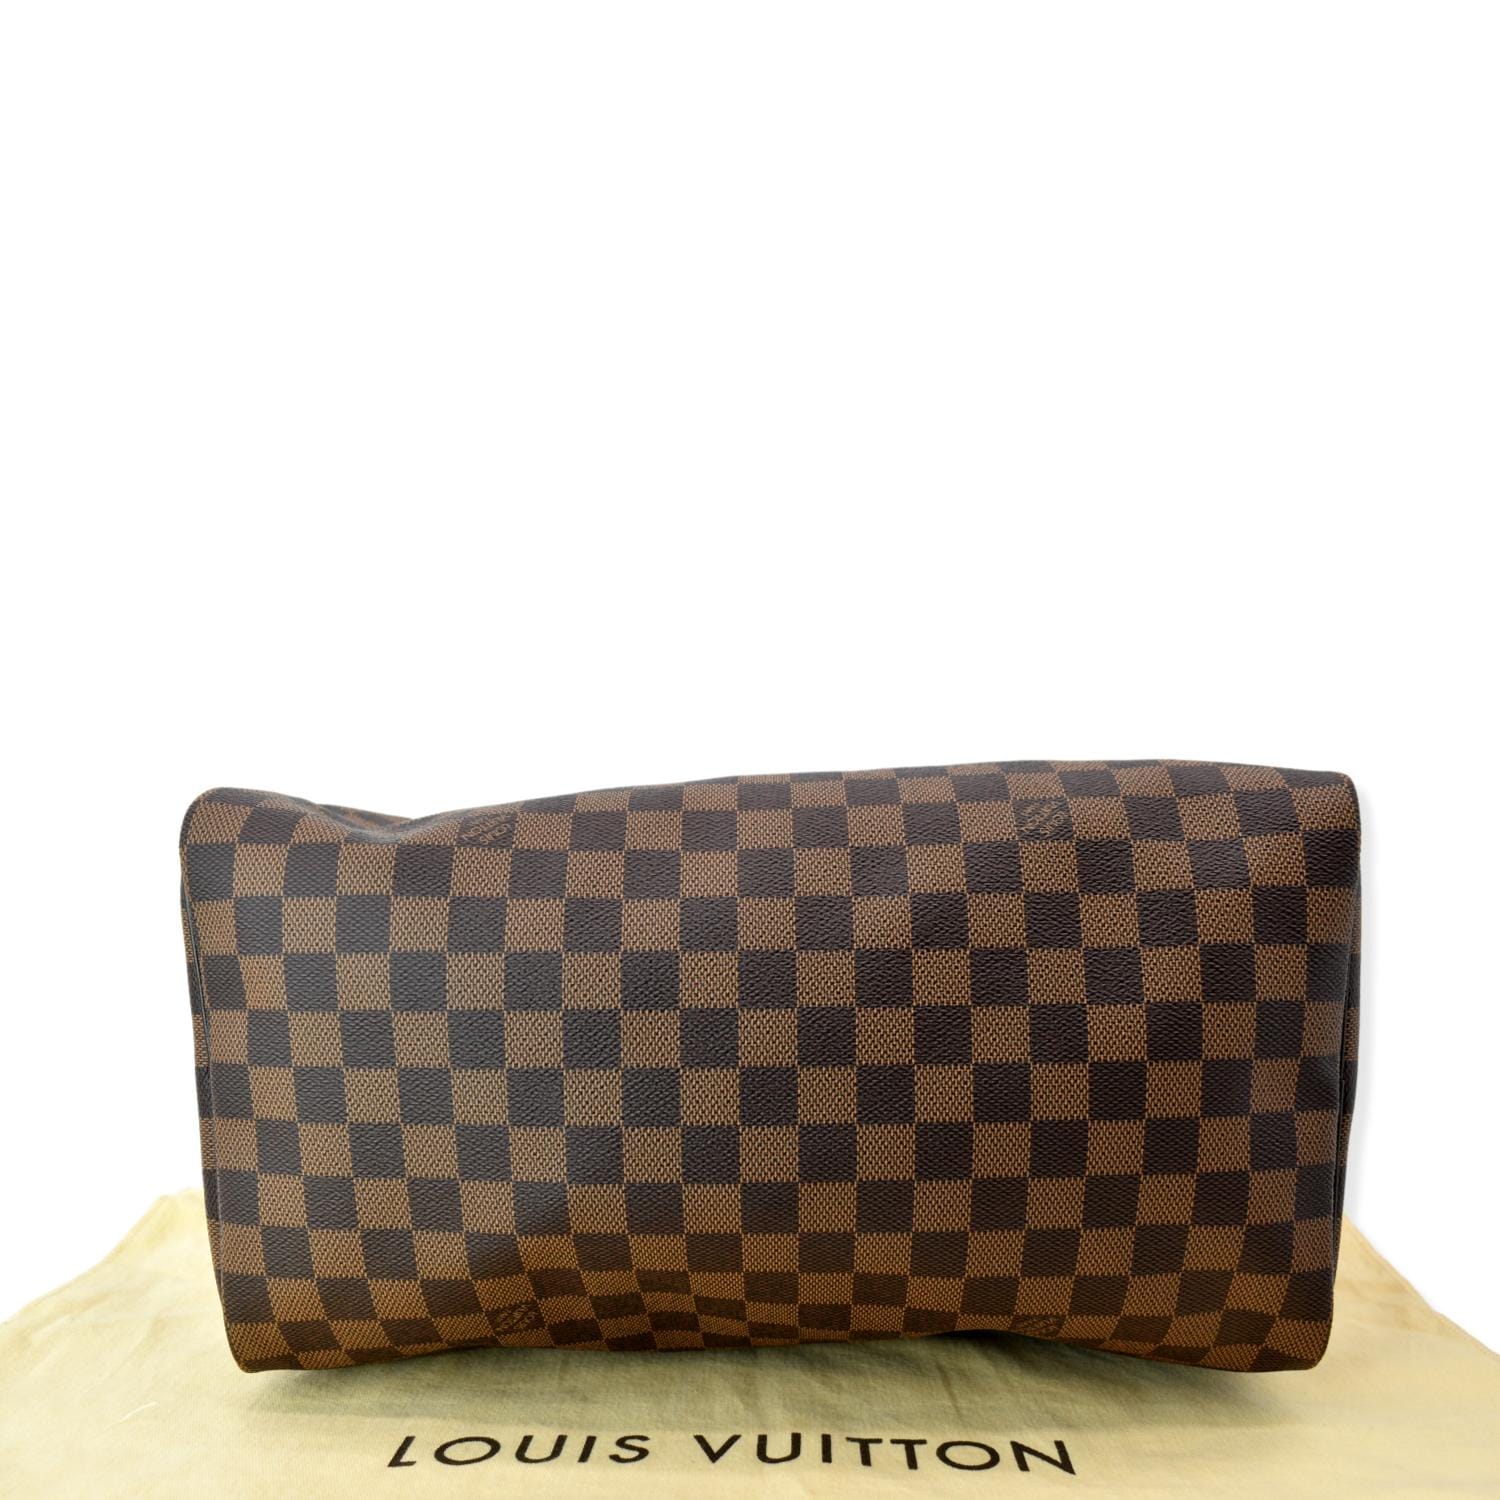 Authentic Louis Vuitton Speedy 35 Damier Ebene Canvas Brown